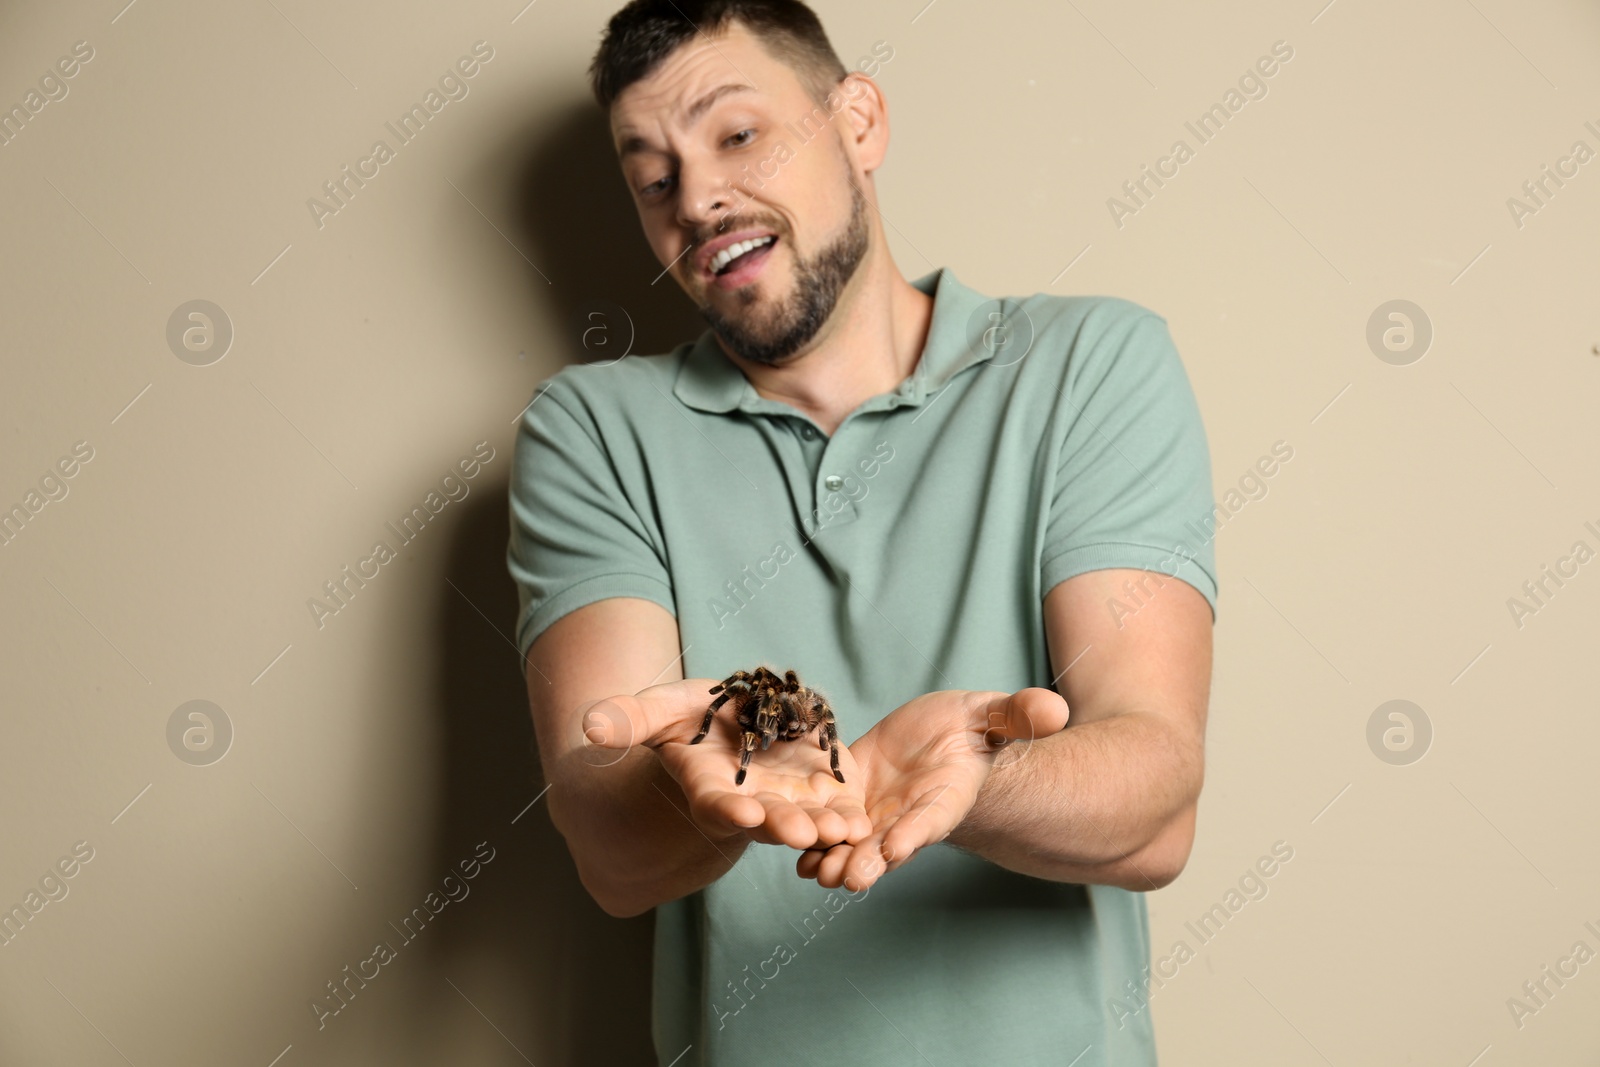 Photo of Scared man holding tarantula on beige background. Arachnophobia (fear of spiders)